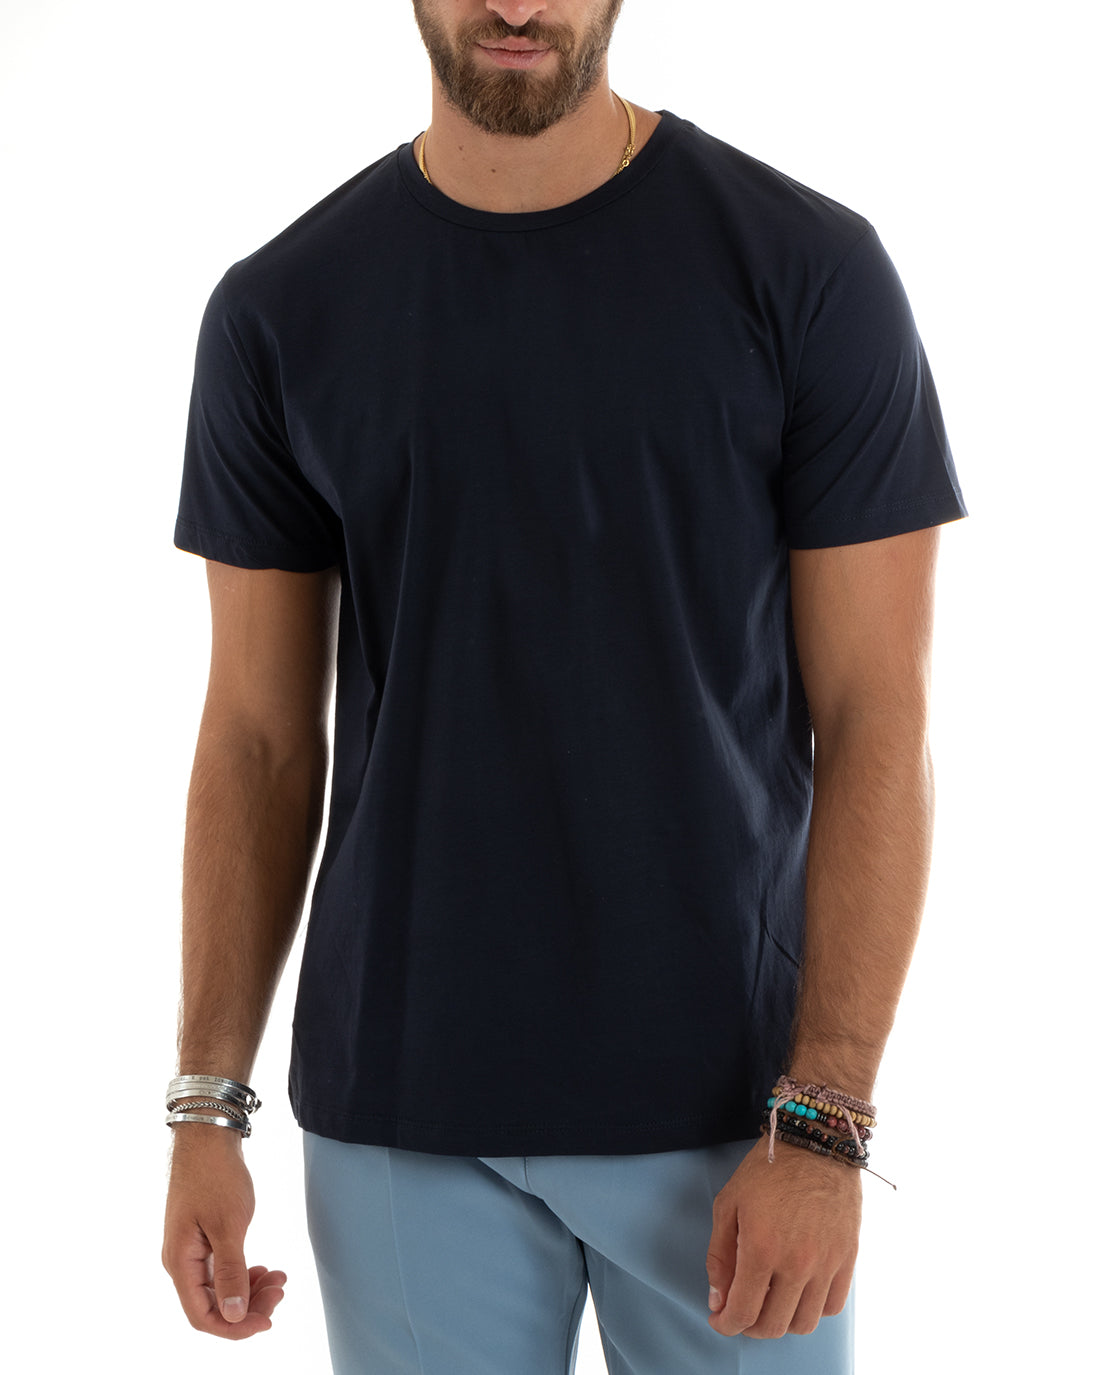 T-shirt Uomo Filo Di Scozia Basic Leggera Tinta Unita Blu Girocollo Casual GIOSAL-TS2977A